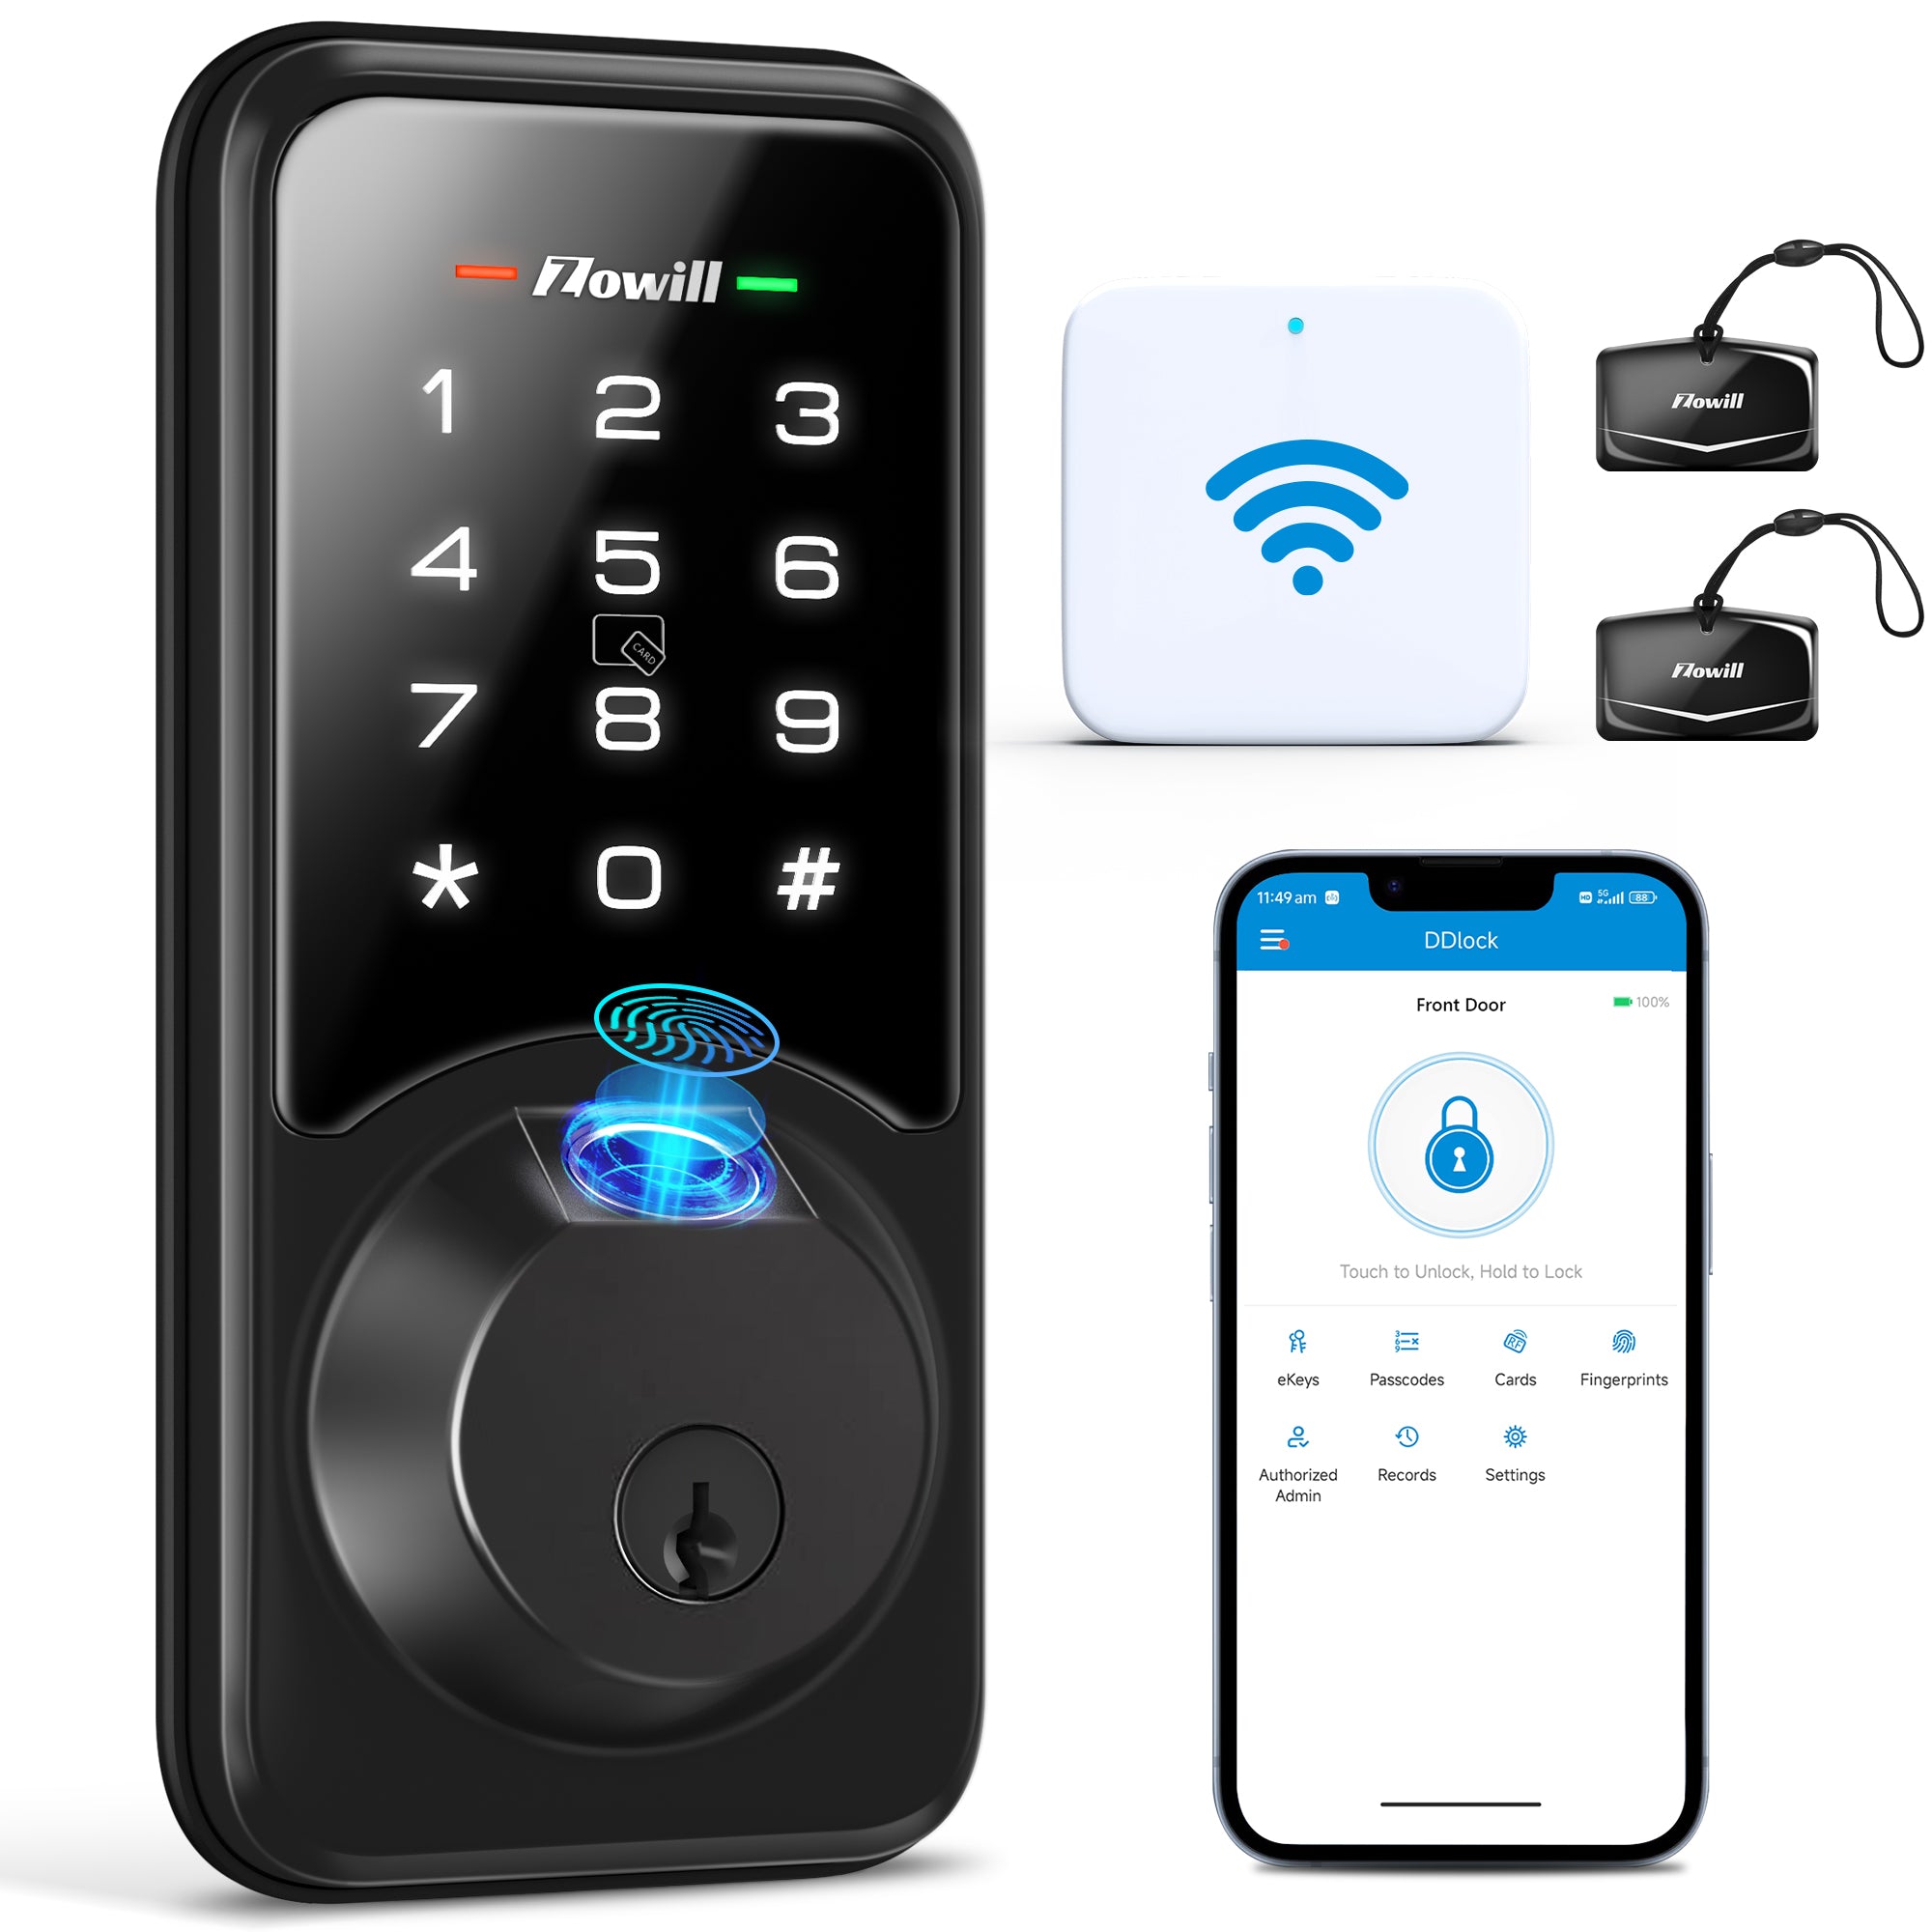 Jikolililili Smart Ring Can Unlock Smart Door, Lock Important Files Of  Mobile Phone, Etc-7 Hypoallergenic Rings For Men Women Unisex